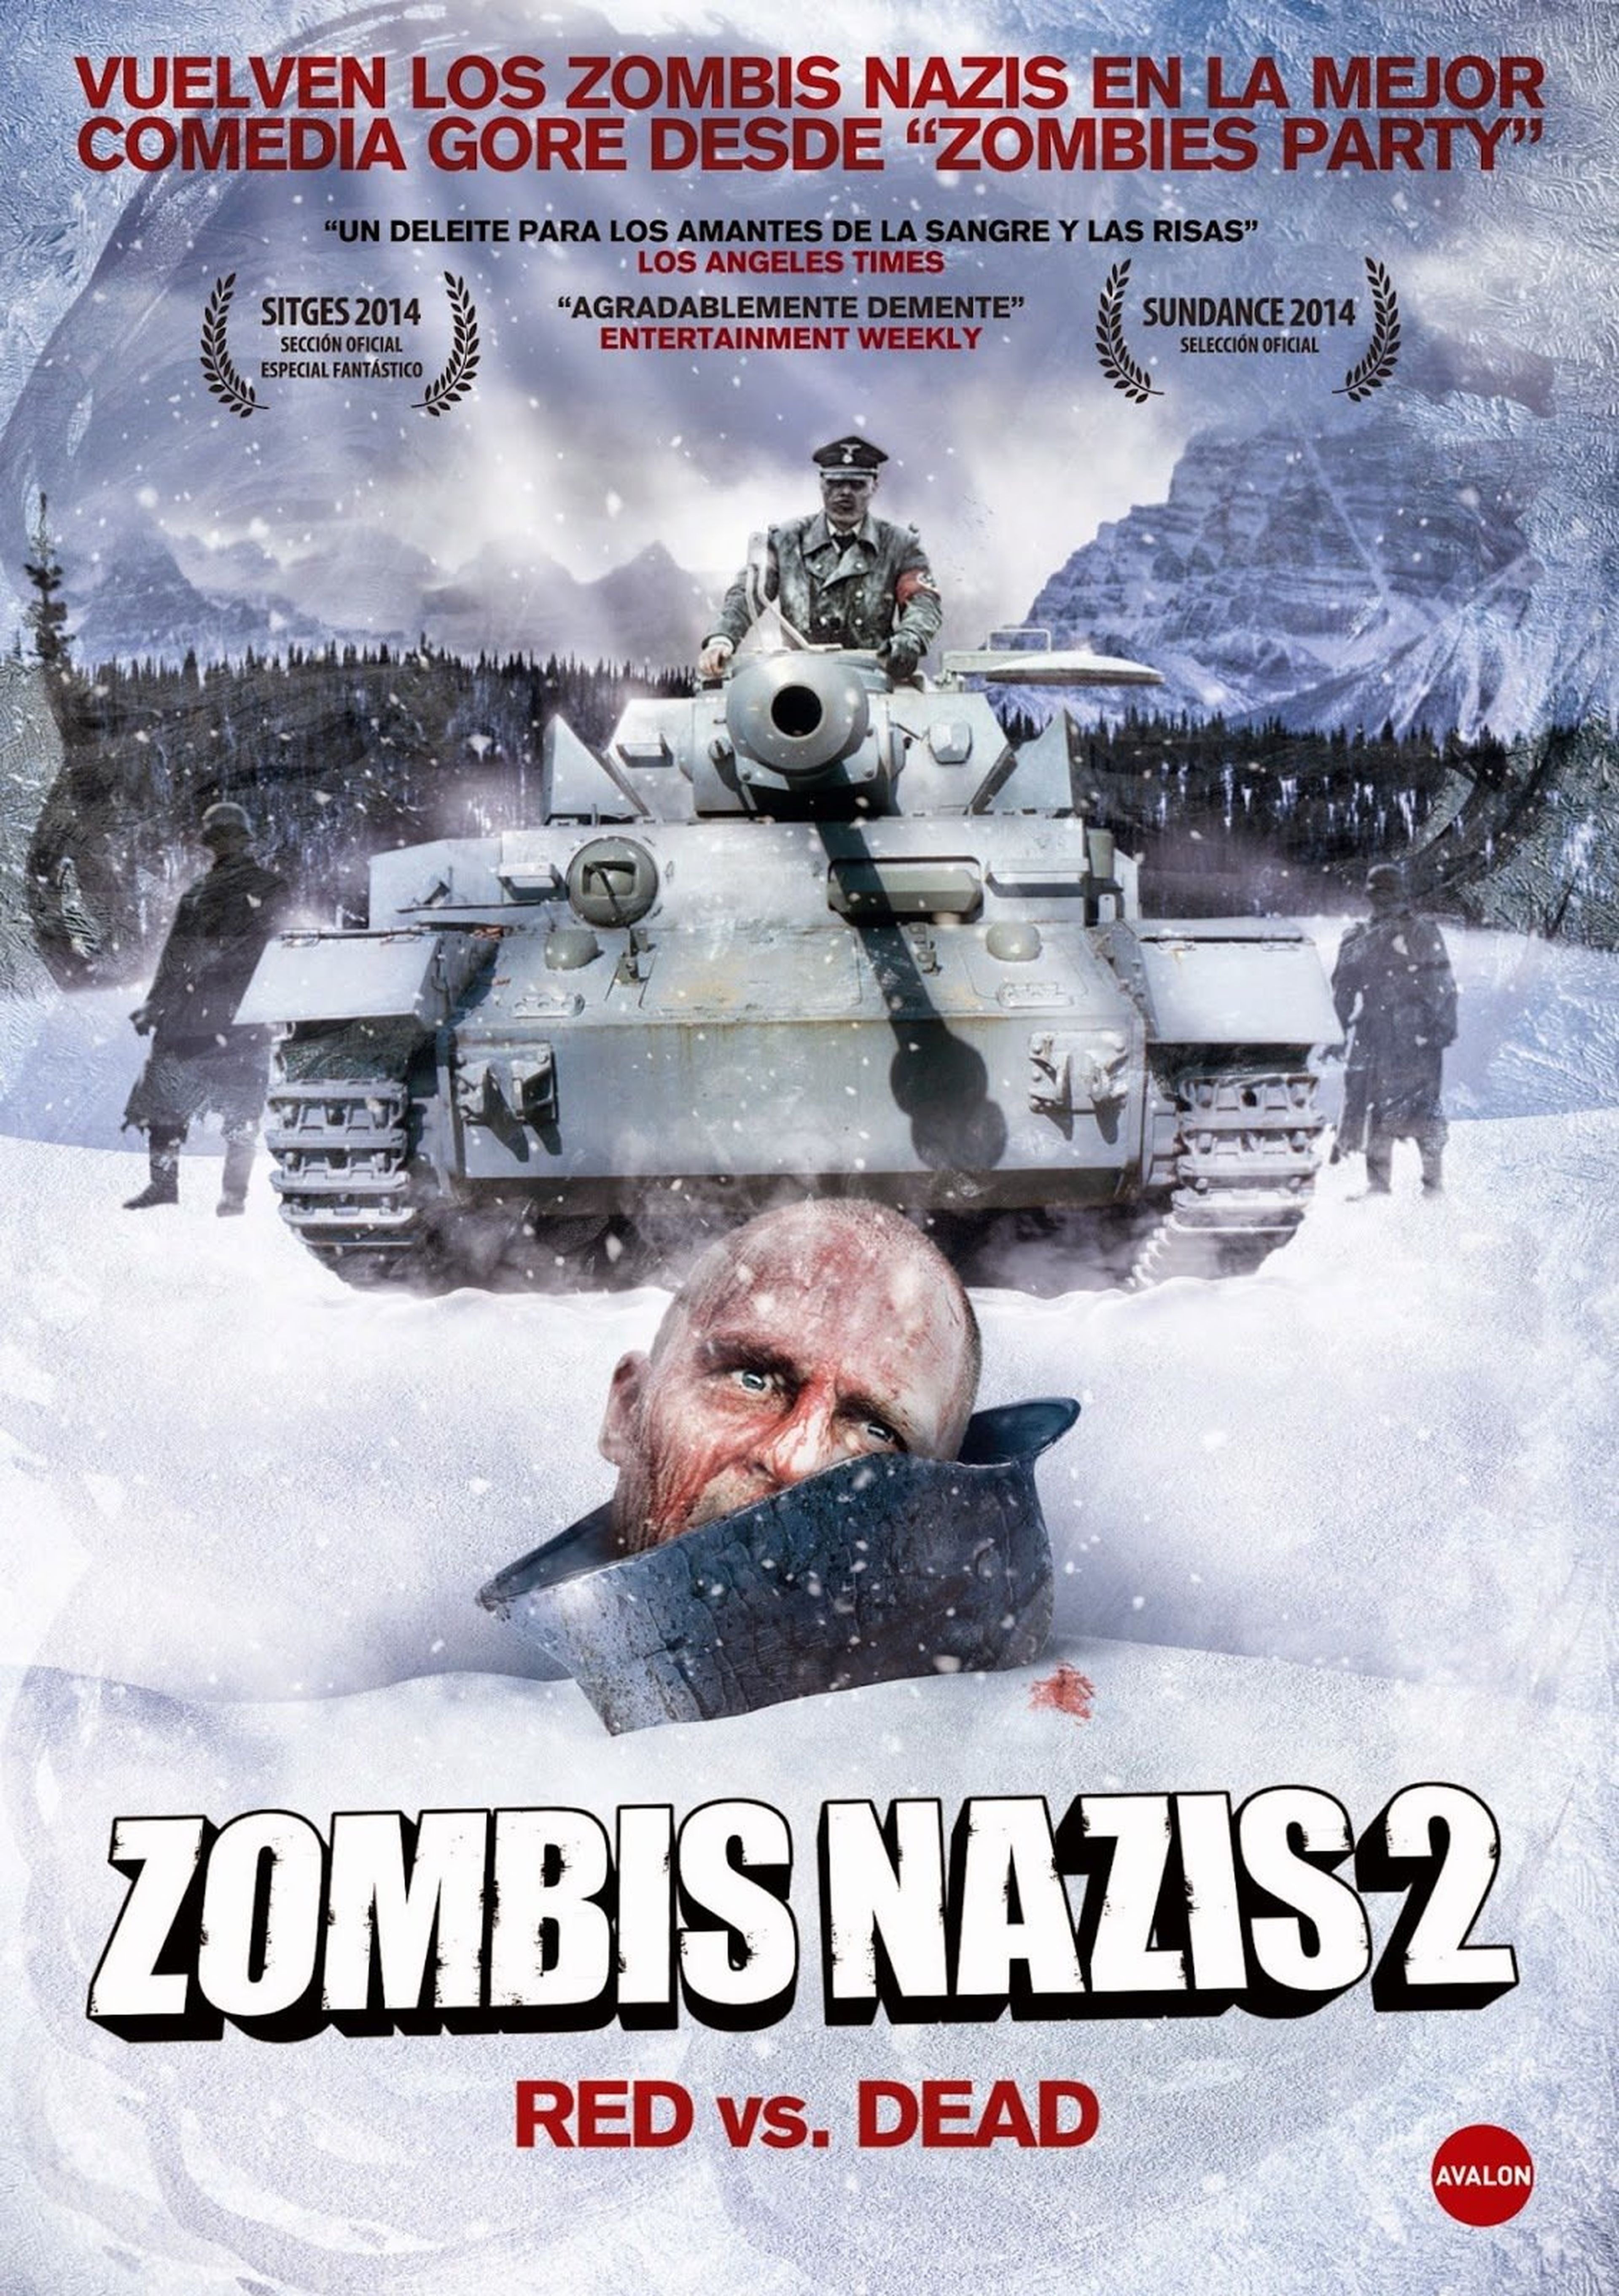 Zombis nazis 2: Rojos vs Muertos